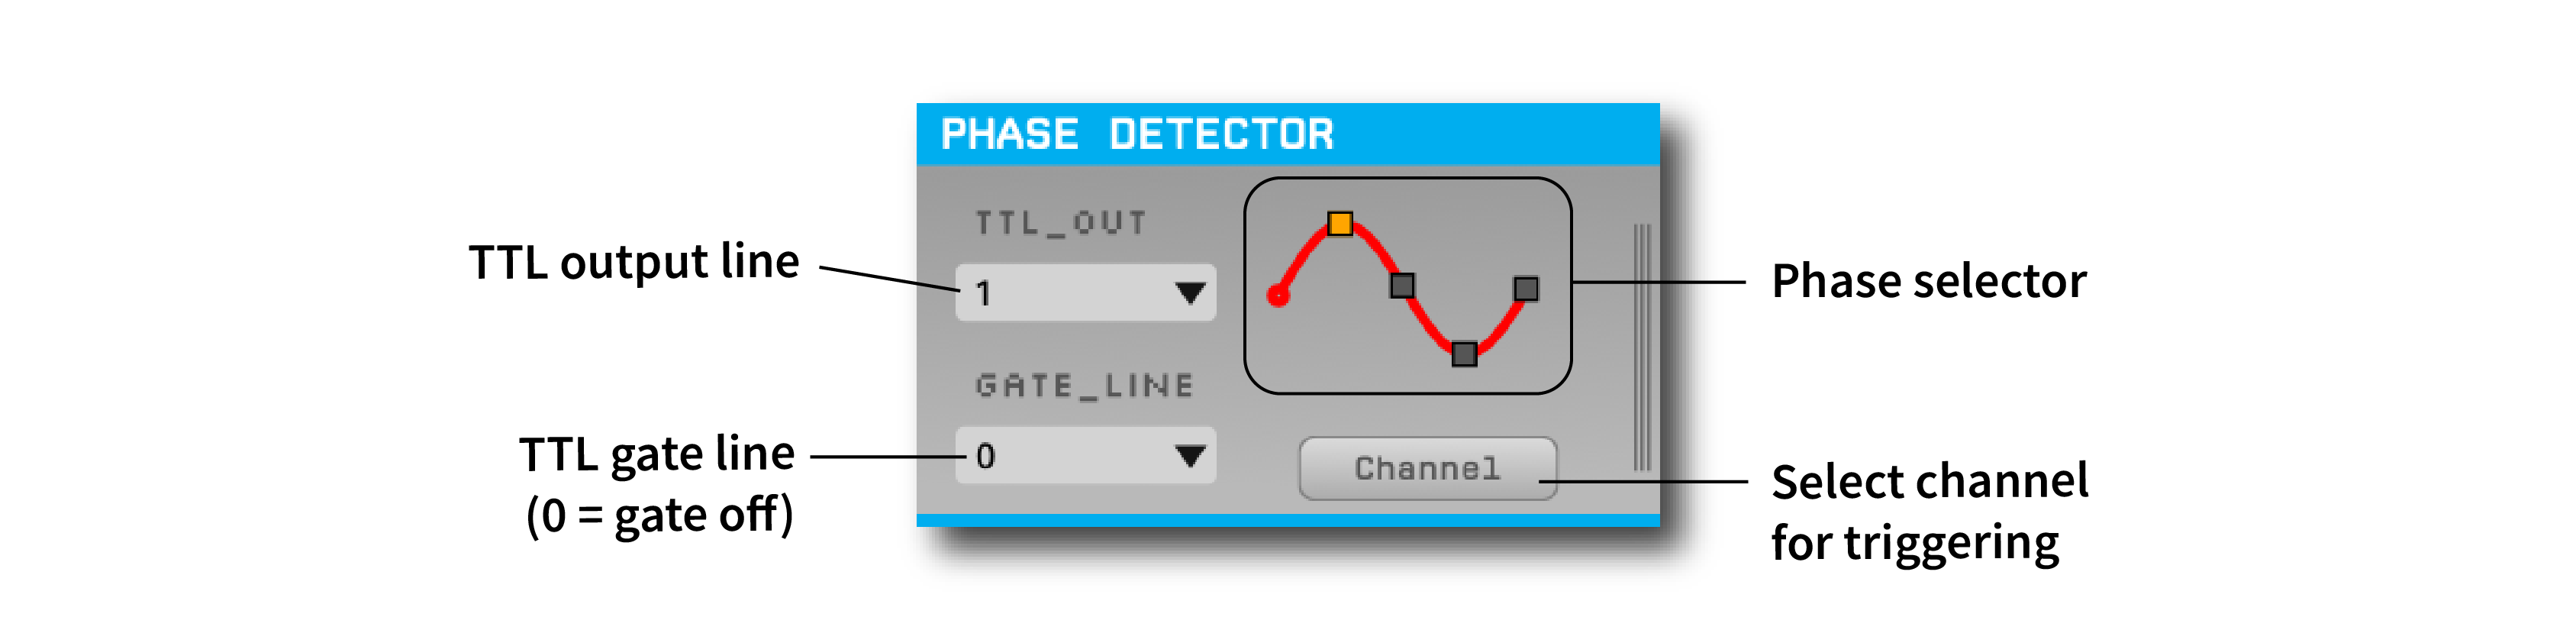 Phase Detector plugin settings interface